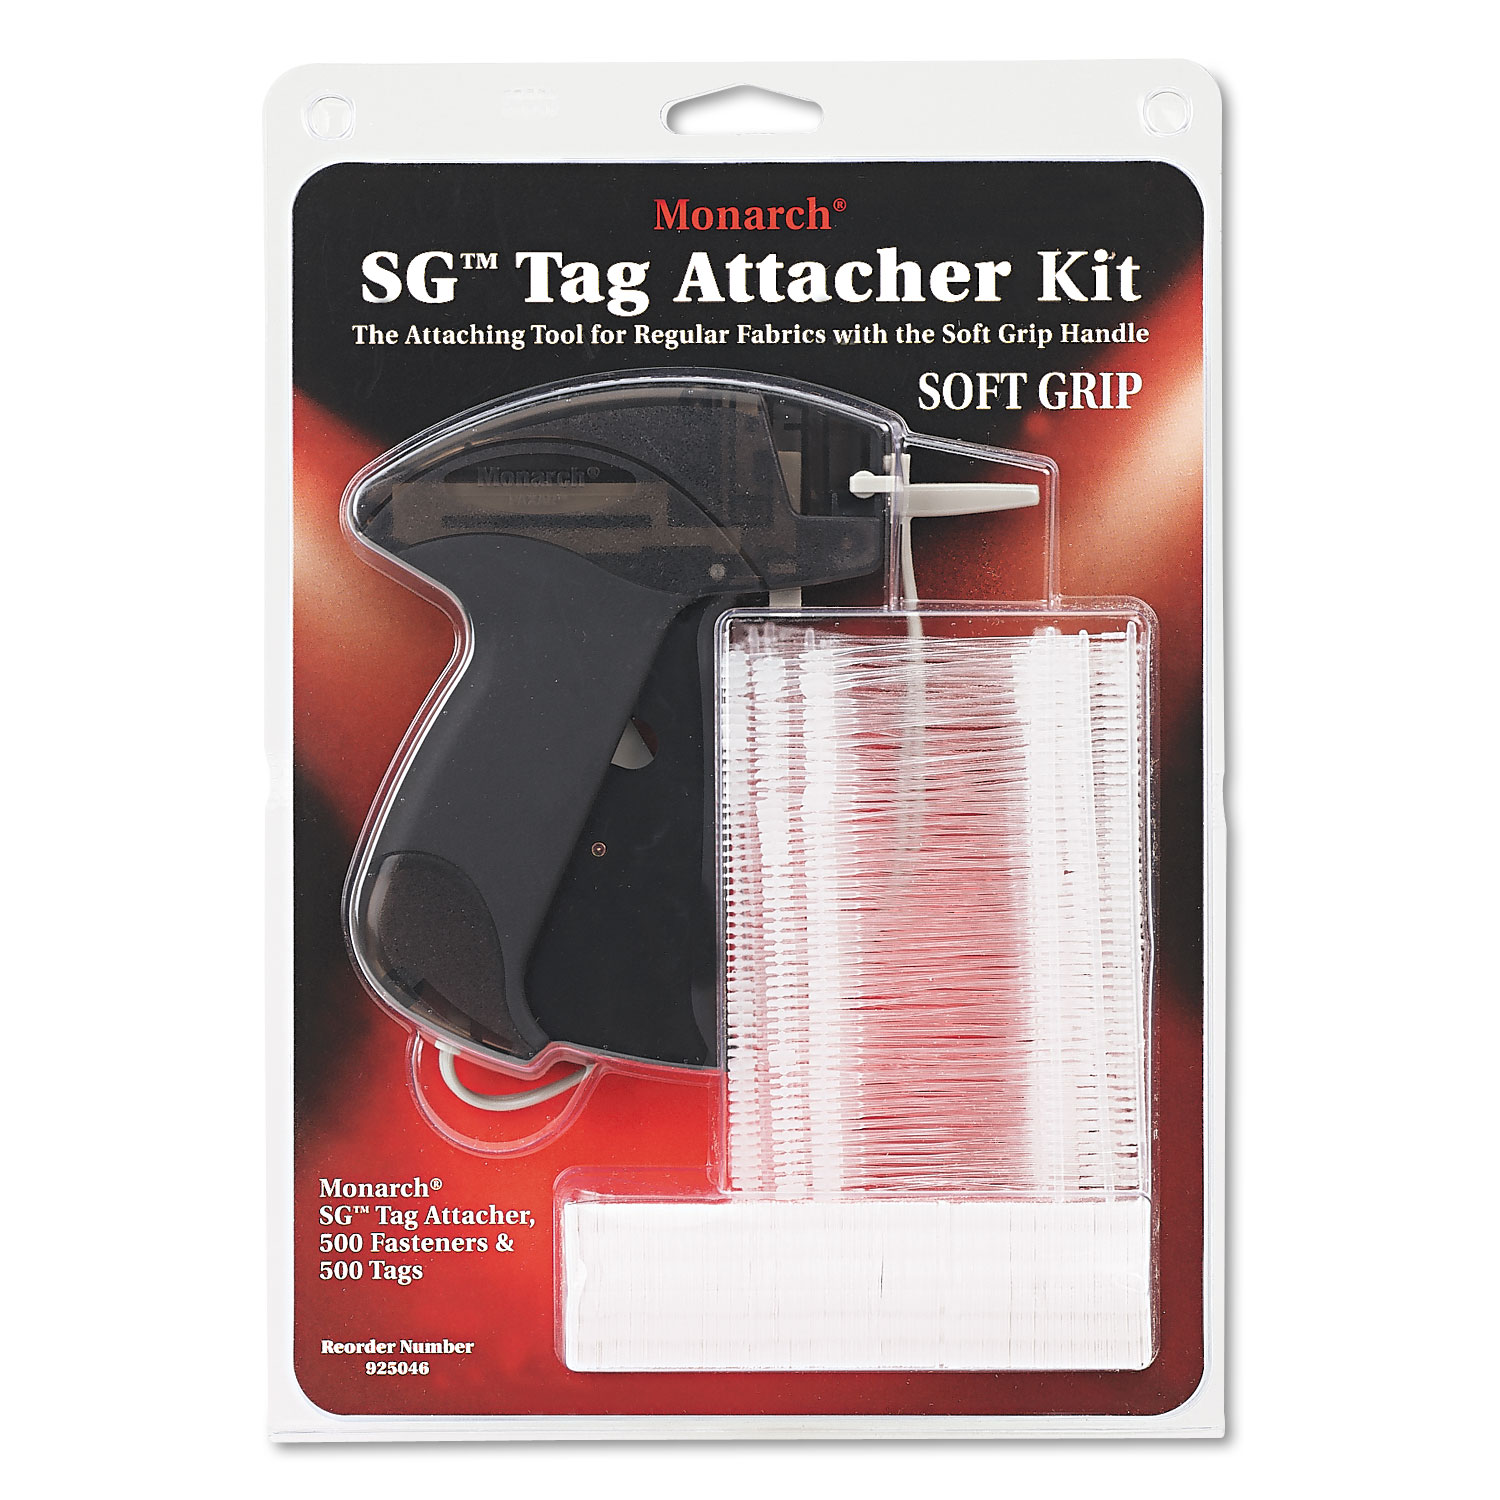 SG Tag Attacher Gun, 2 Tagger Tail Fasteners, Smoke